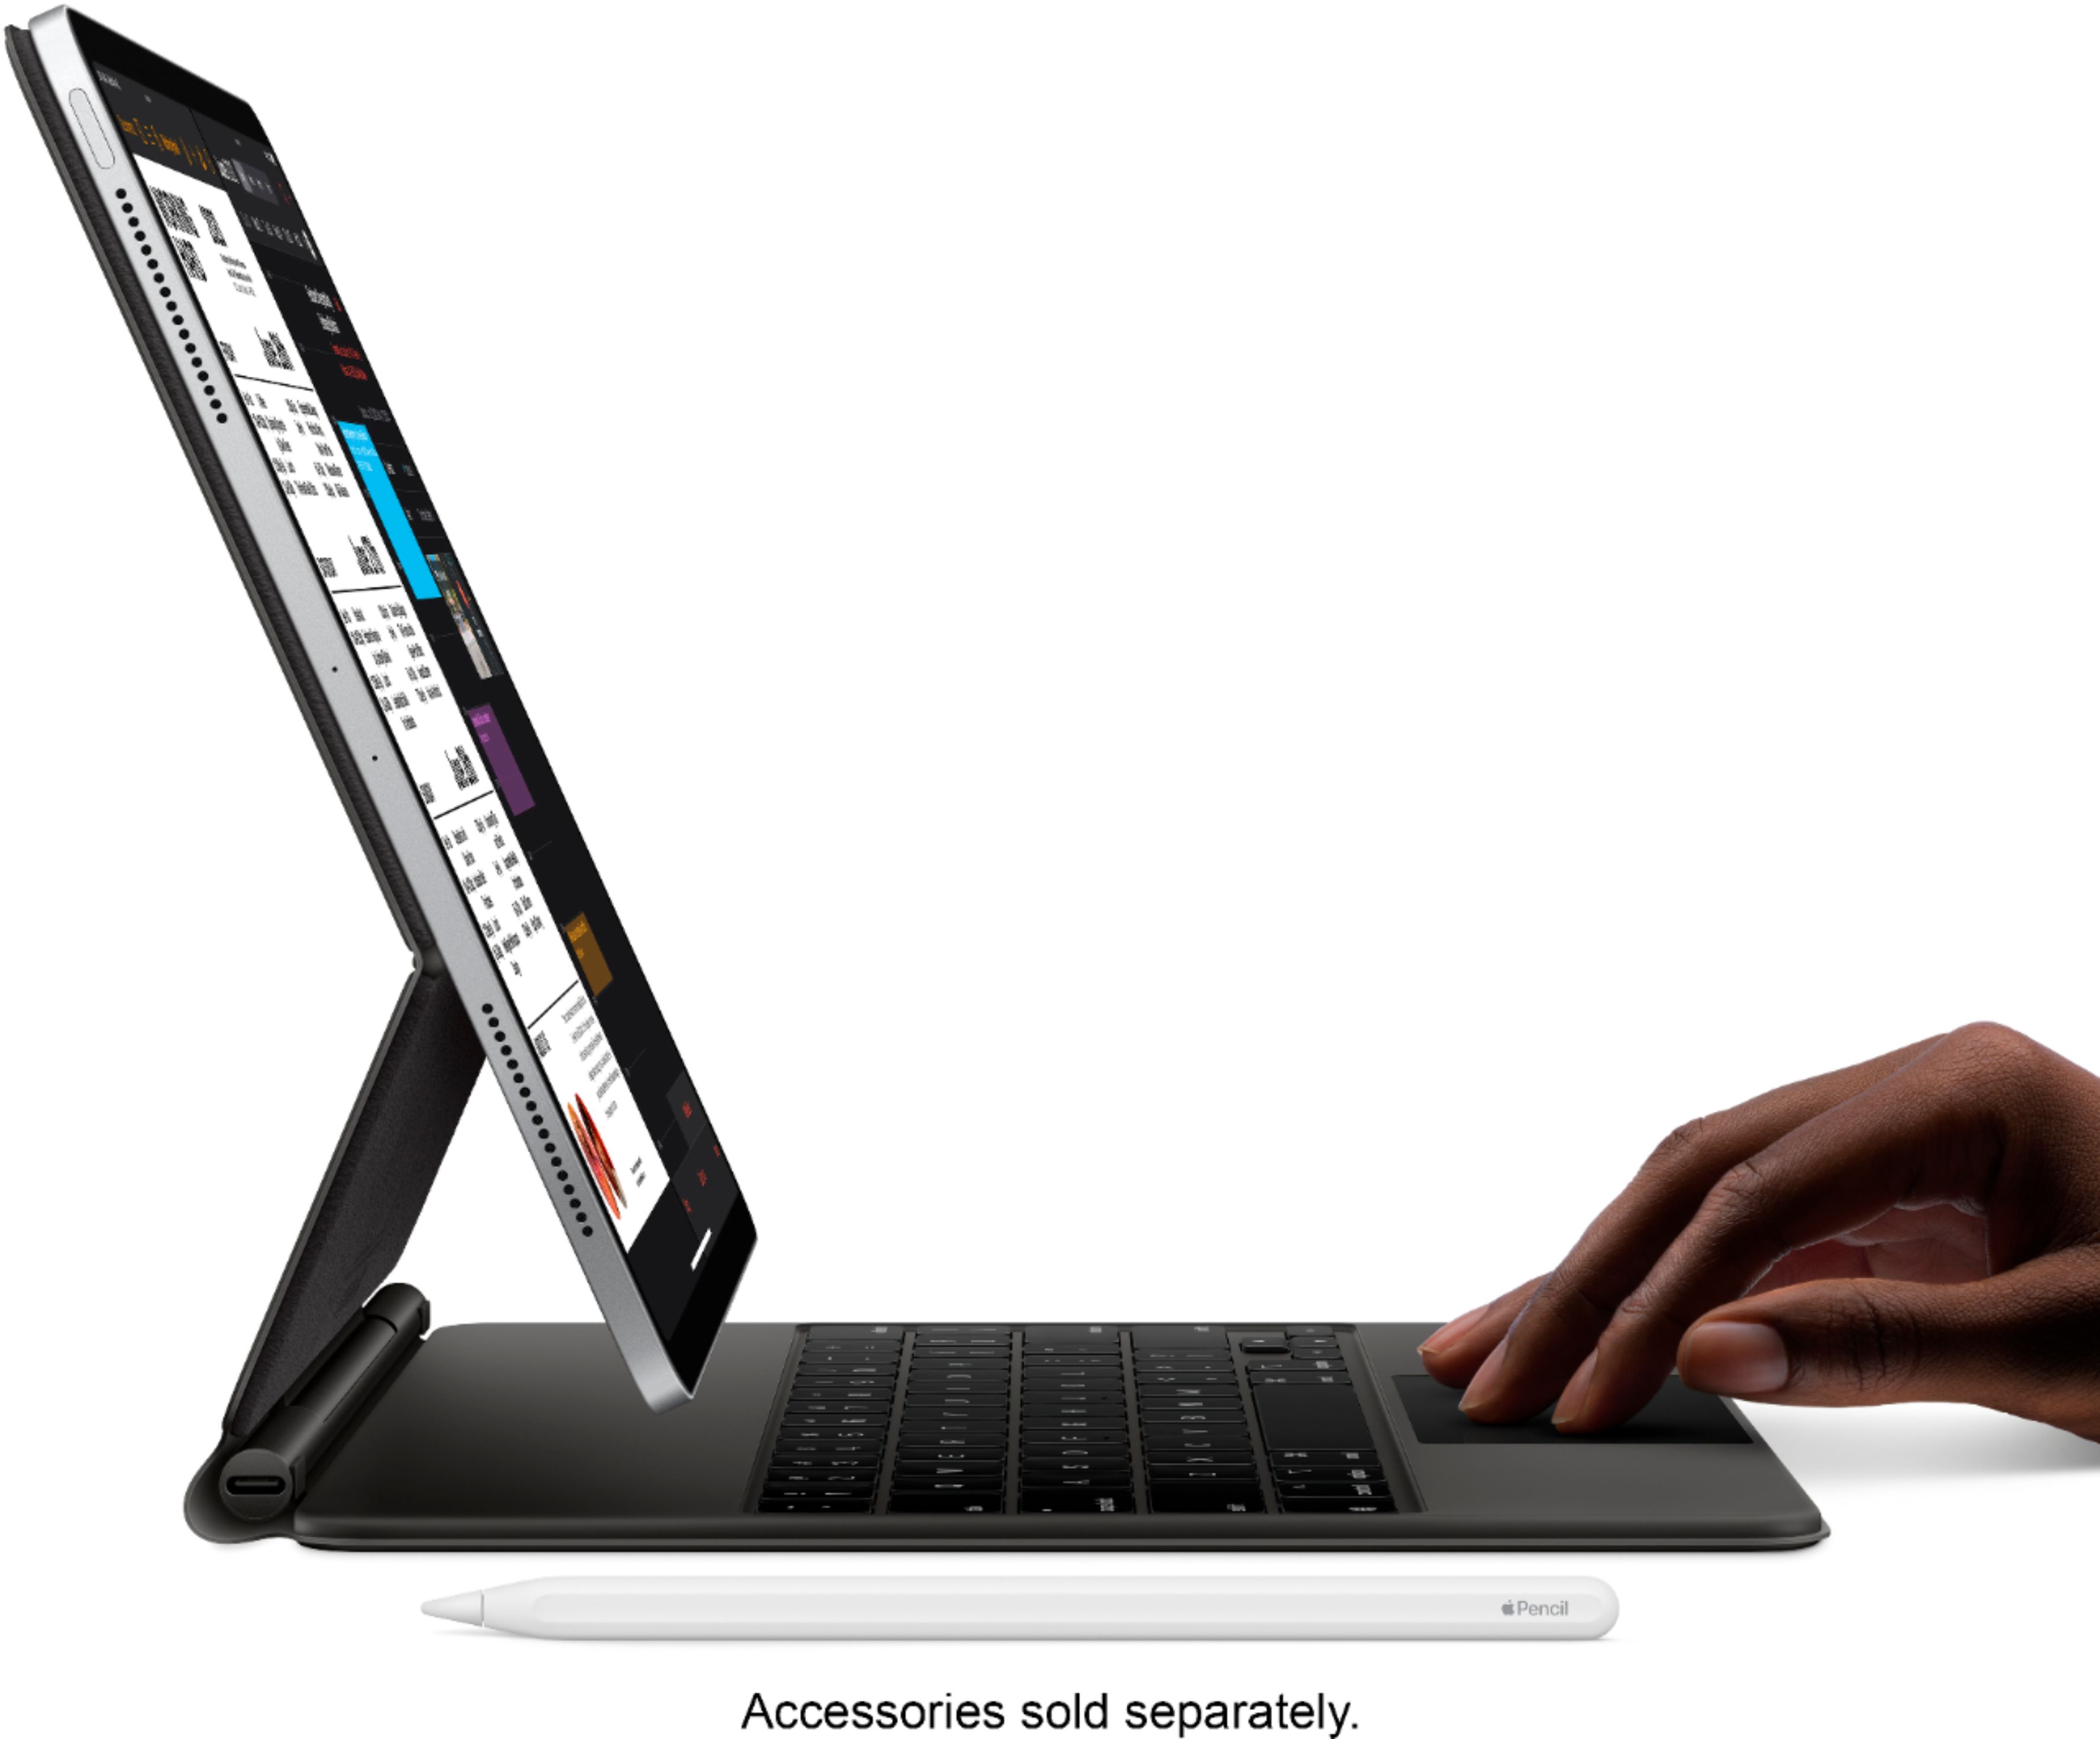 Apple 12.9-inch iPad Pro Wi-Fi + Cellular 128GB - Space Grey